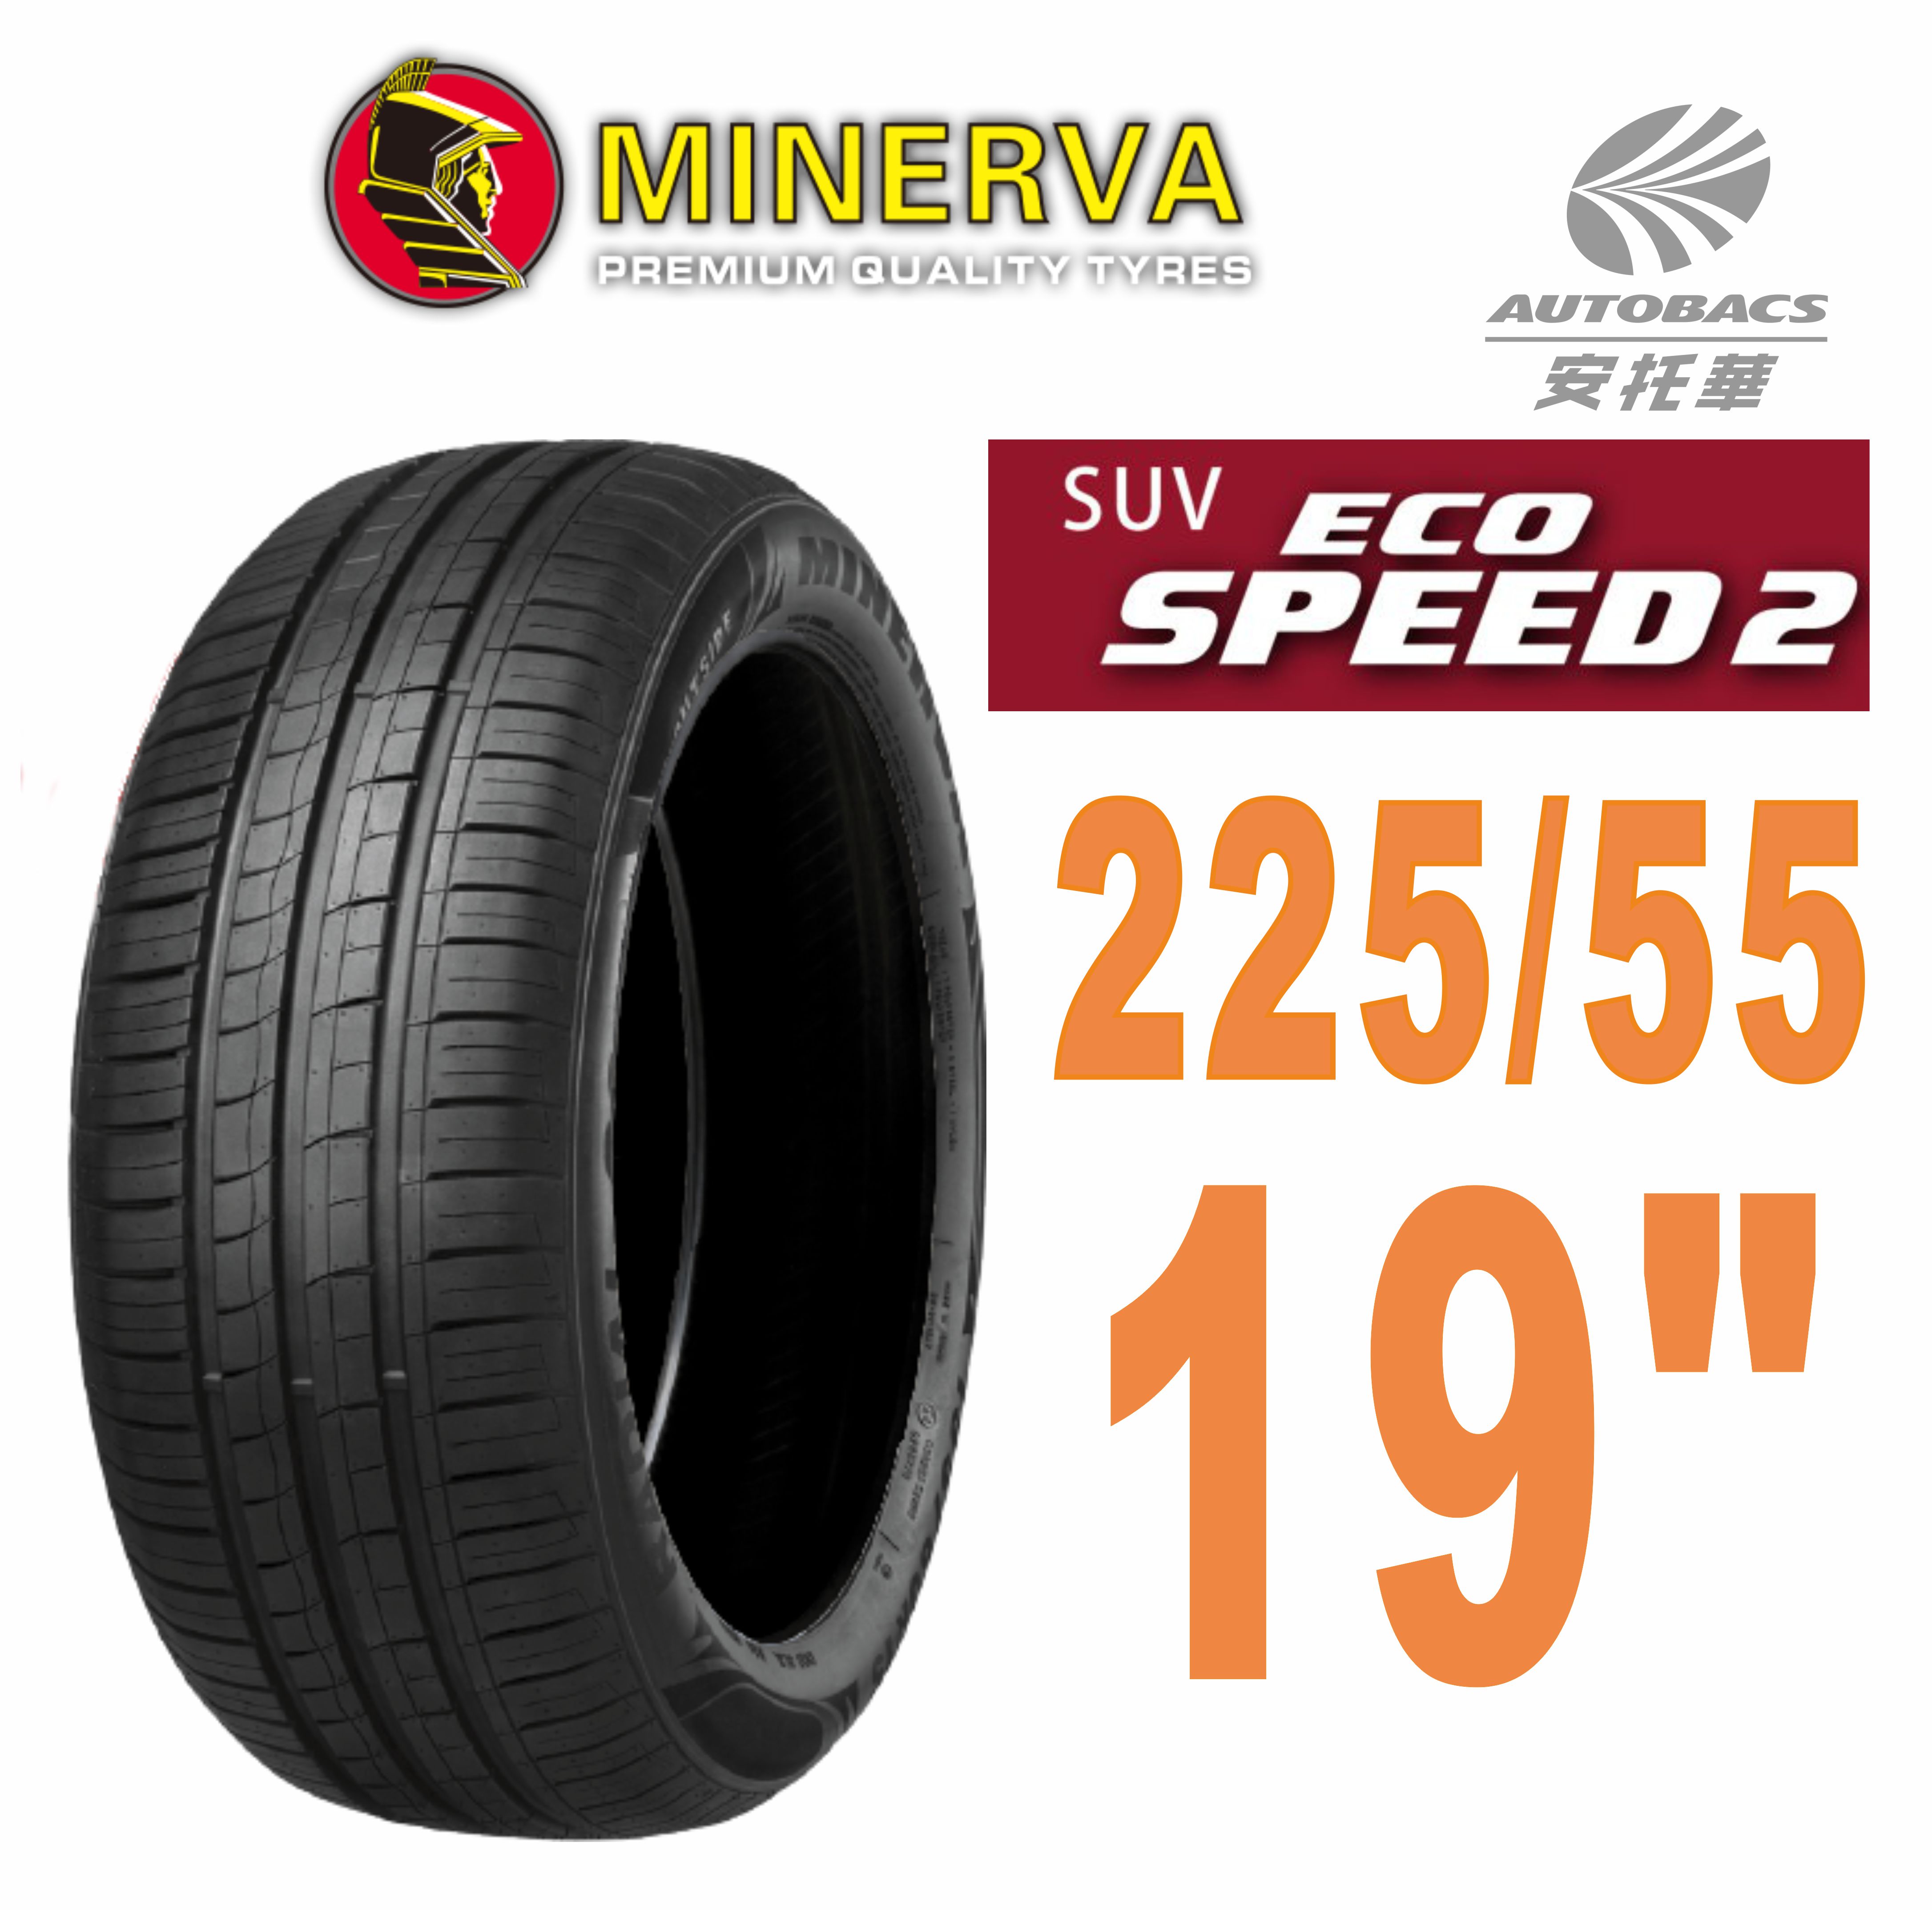 【MINERVA】ECOSPEED2 SUV 米納瓦休旅輪胎 225/55/19(安托華)